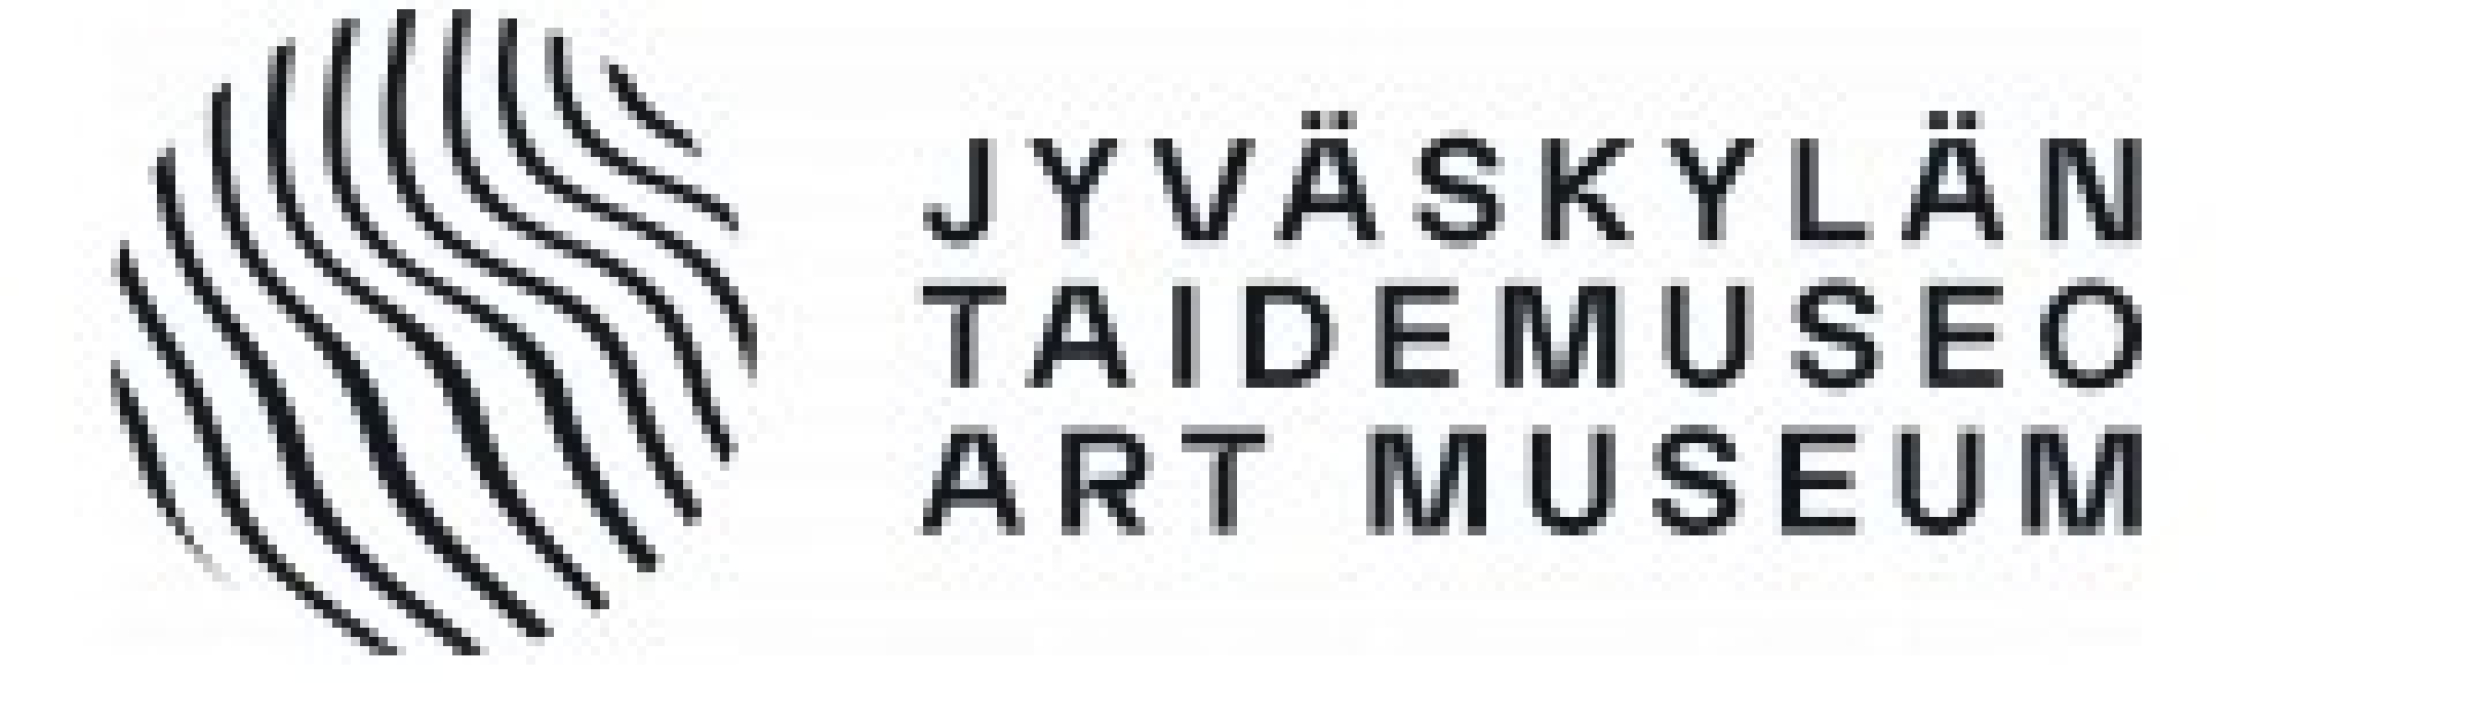 art museon logo